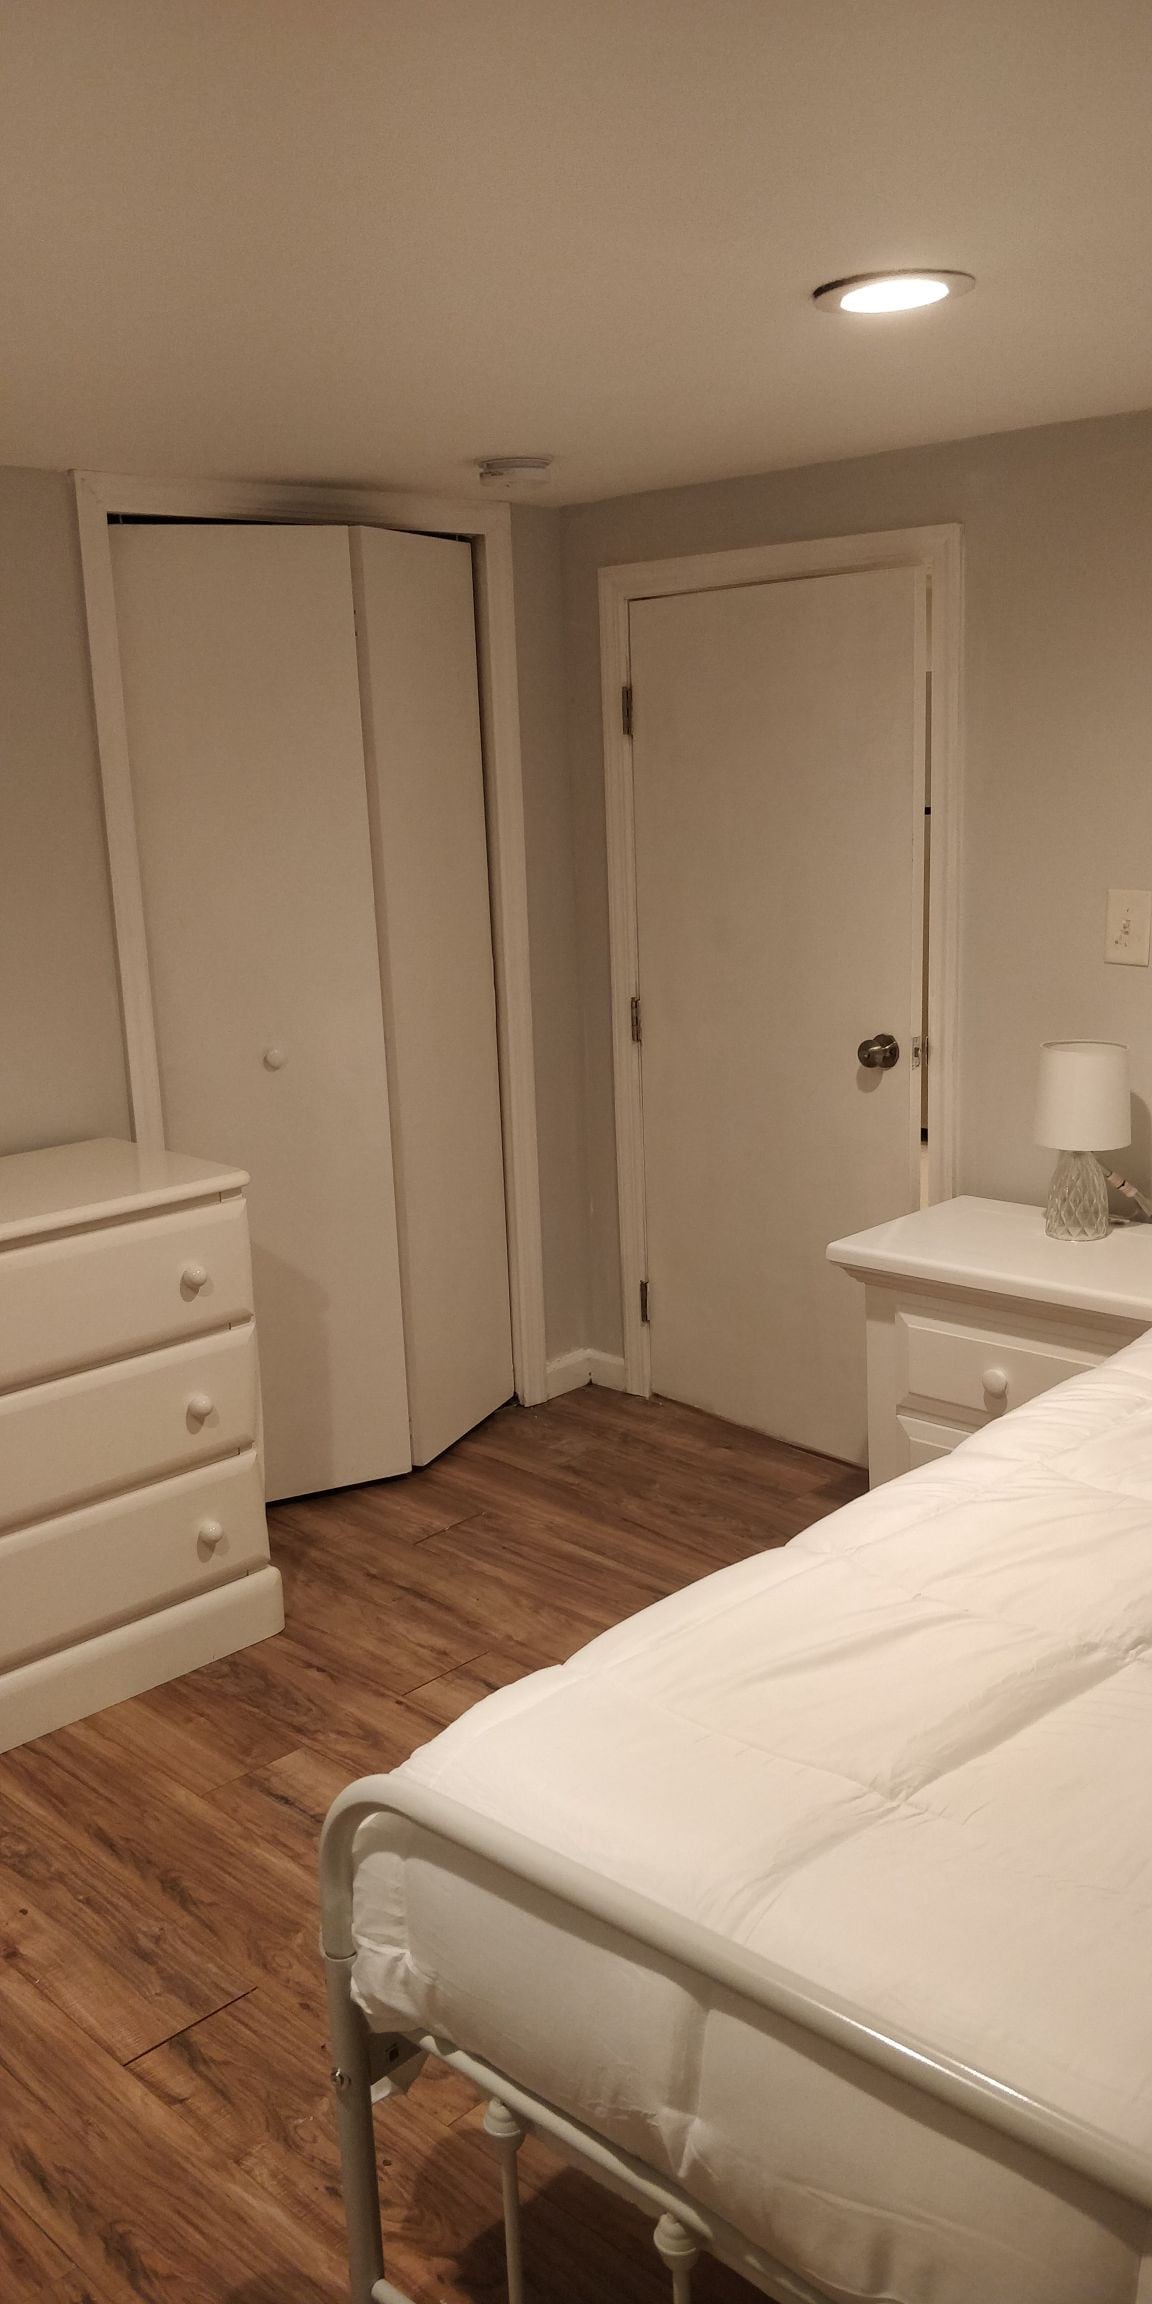 Neat one-bedroom apartment